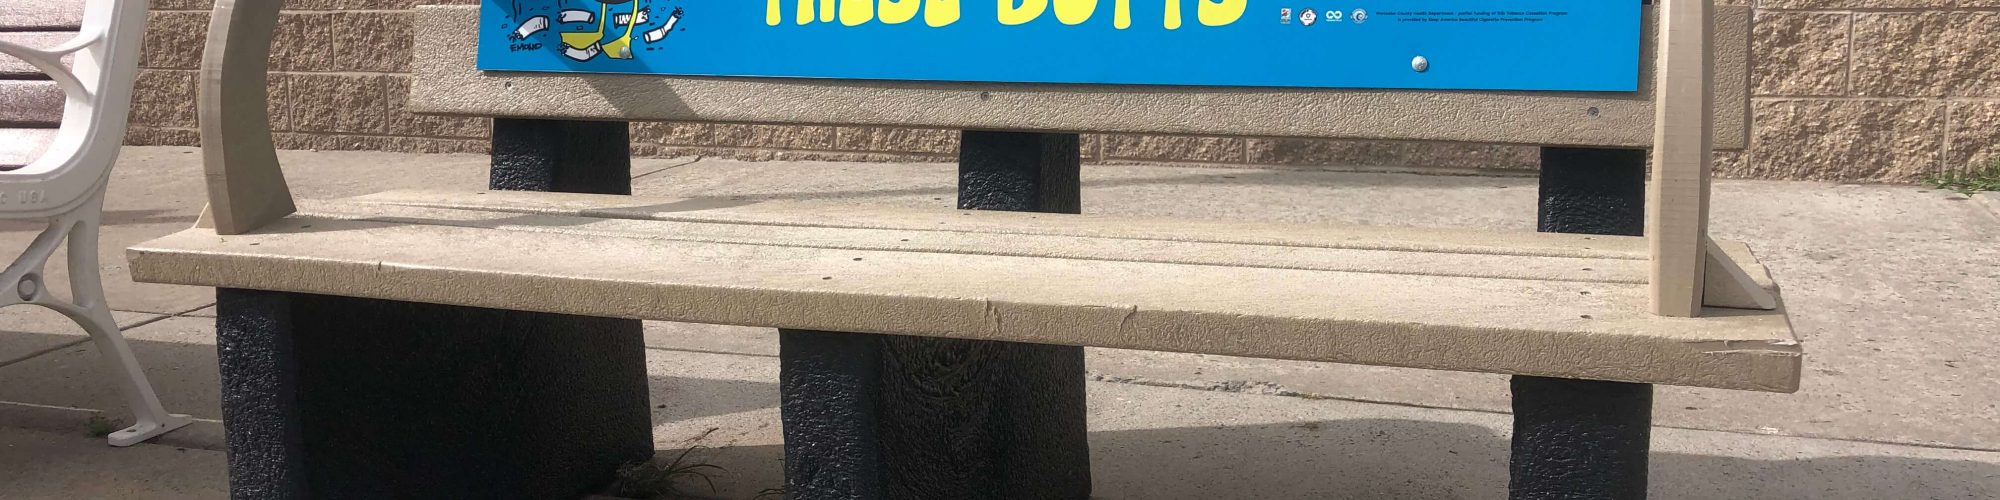 boardwalk bench